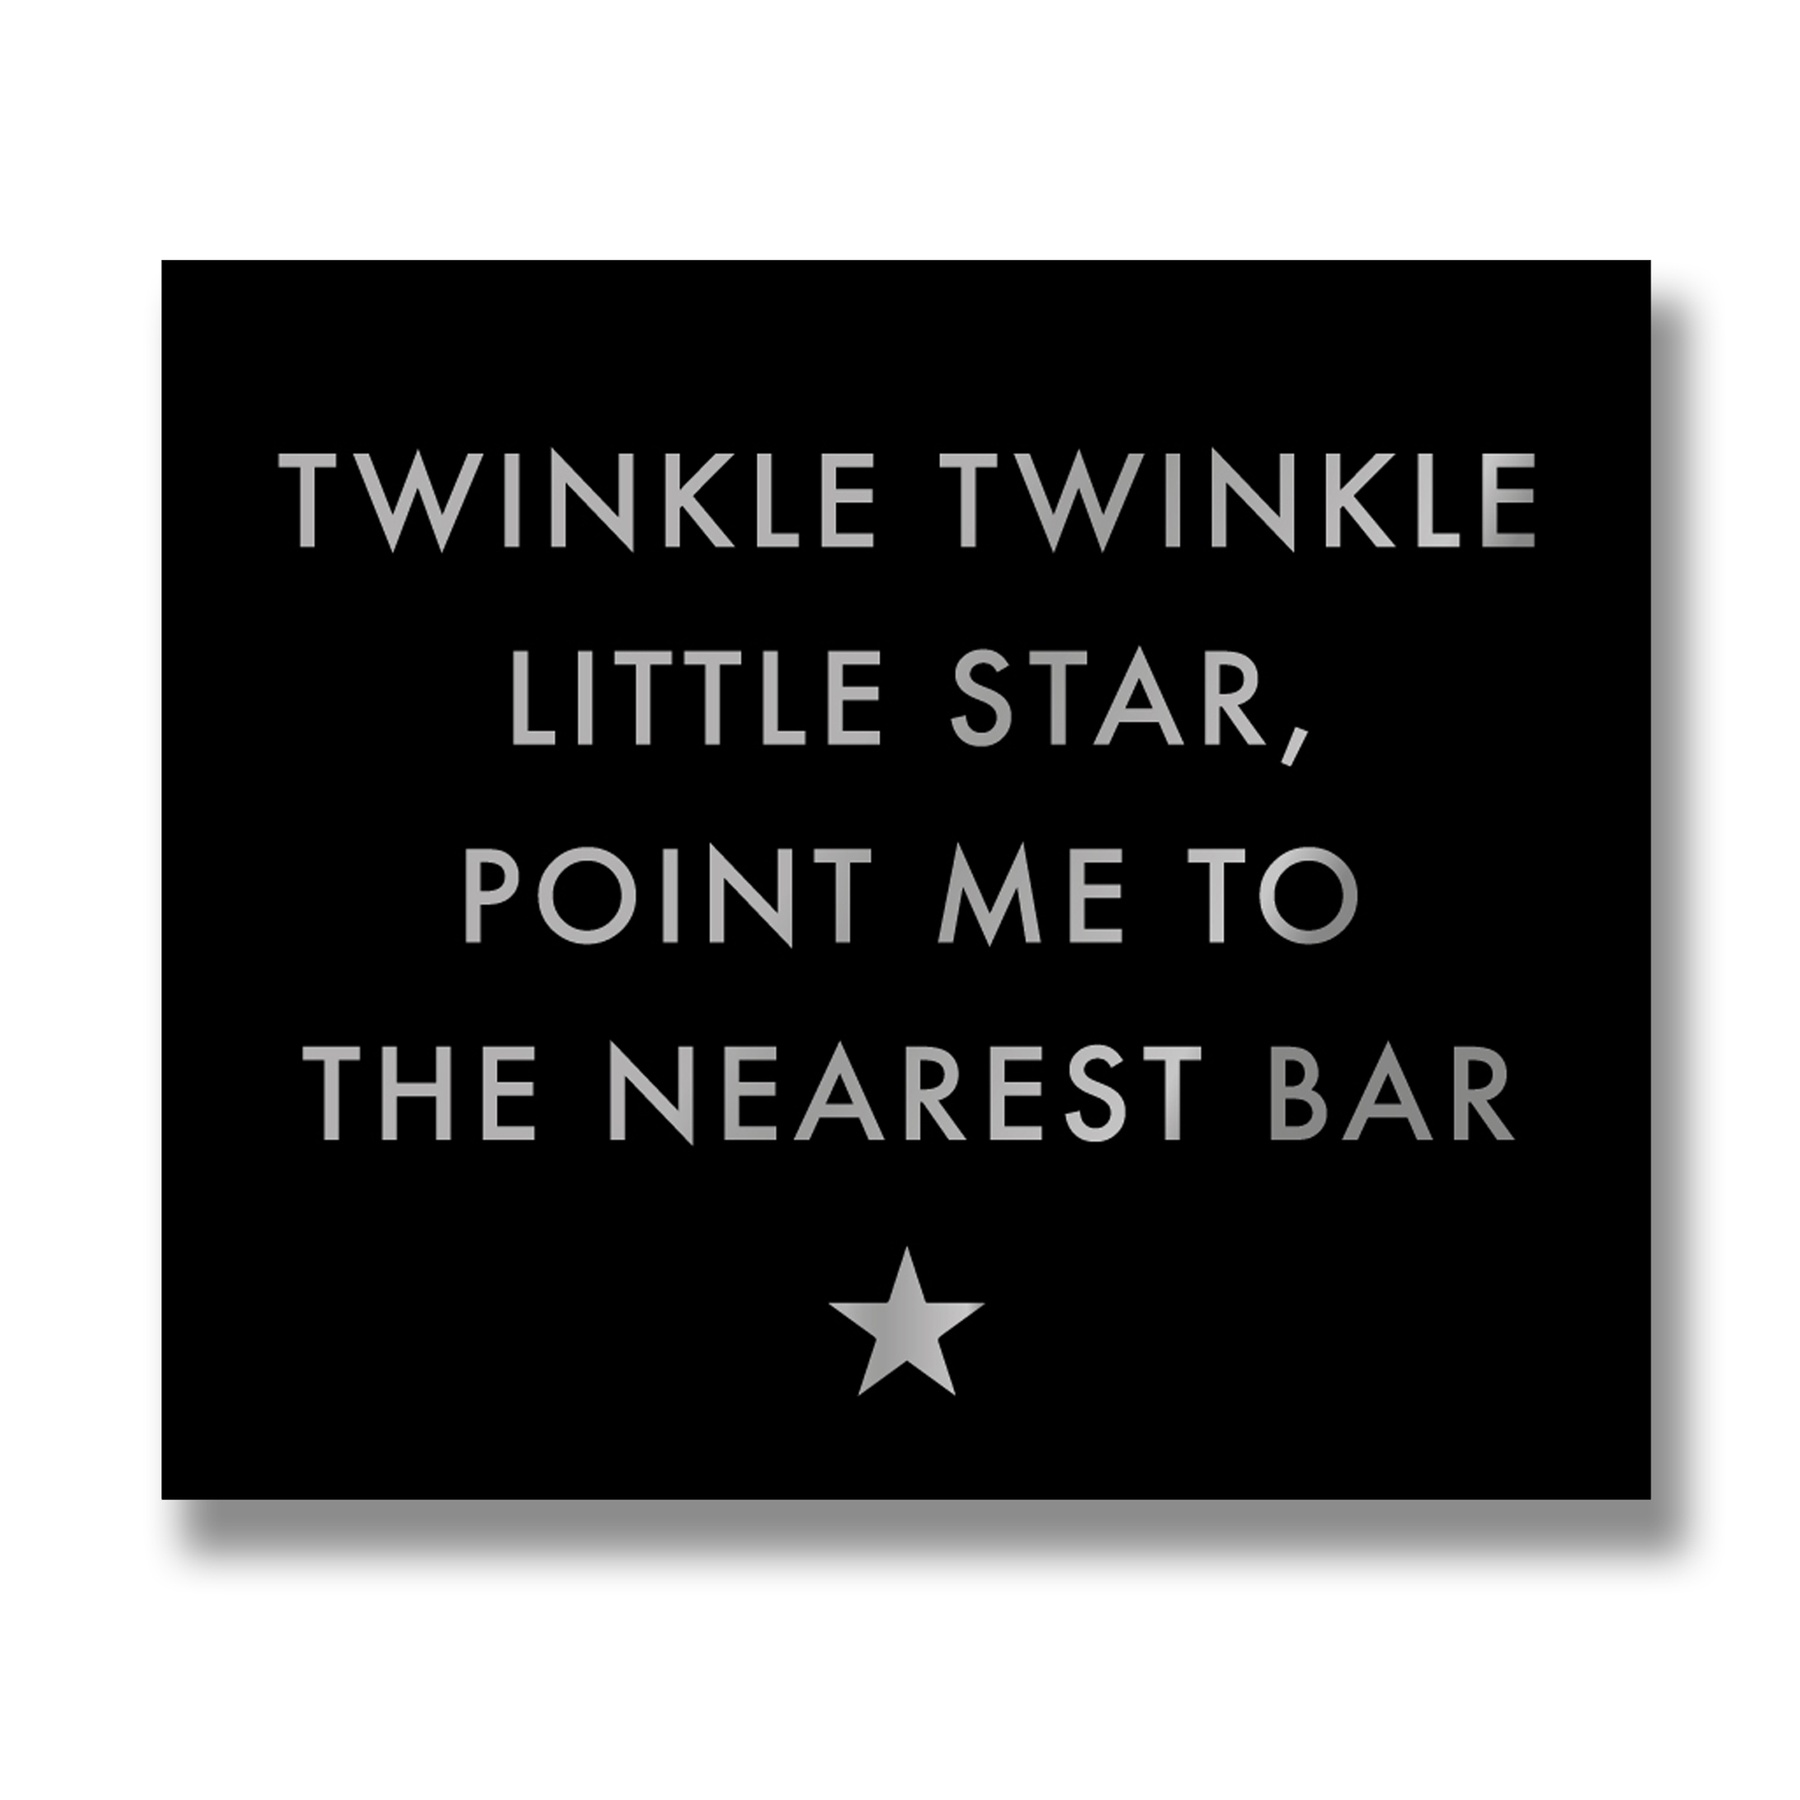 Twinkle Twinkle Silver Foil Plaque - Image 1